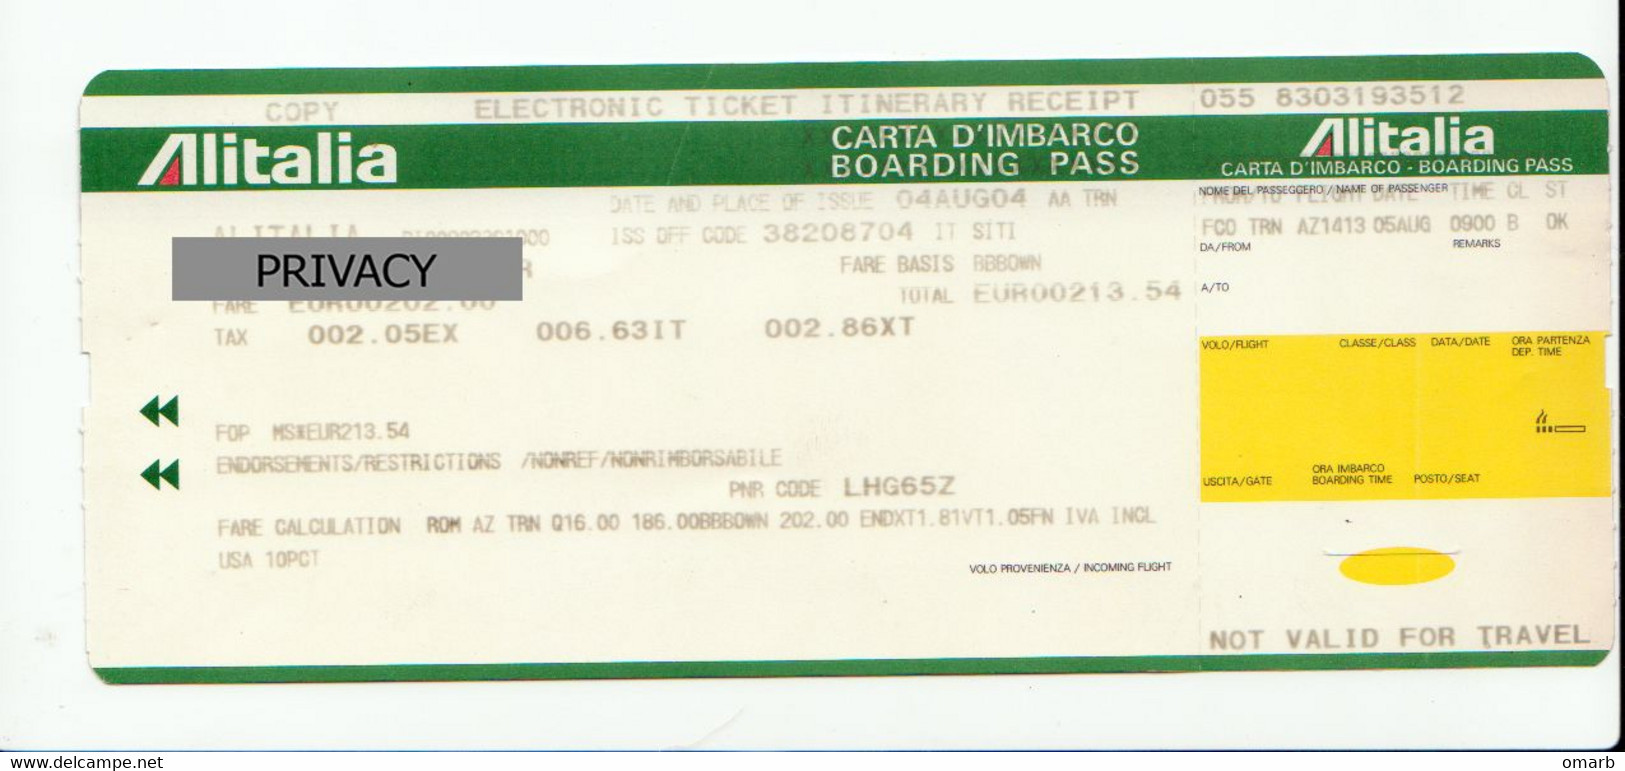 Alt1113 Alitalia Airways Billets Avion Ticket Biglietto Aereo Passenger Itinerary Receipt Imbarco Boarding Torino Roma - Europa